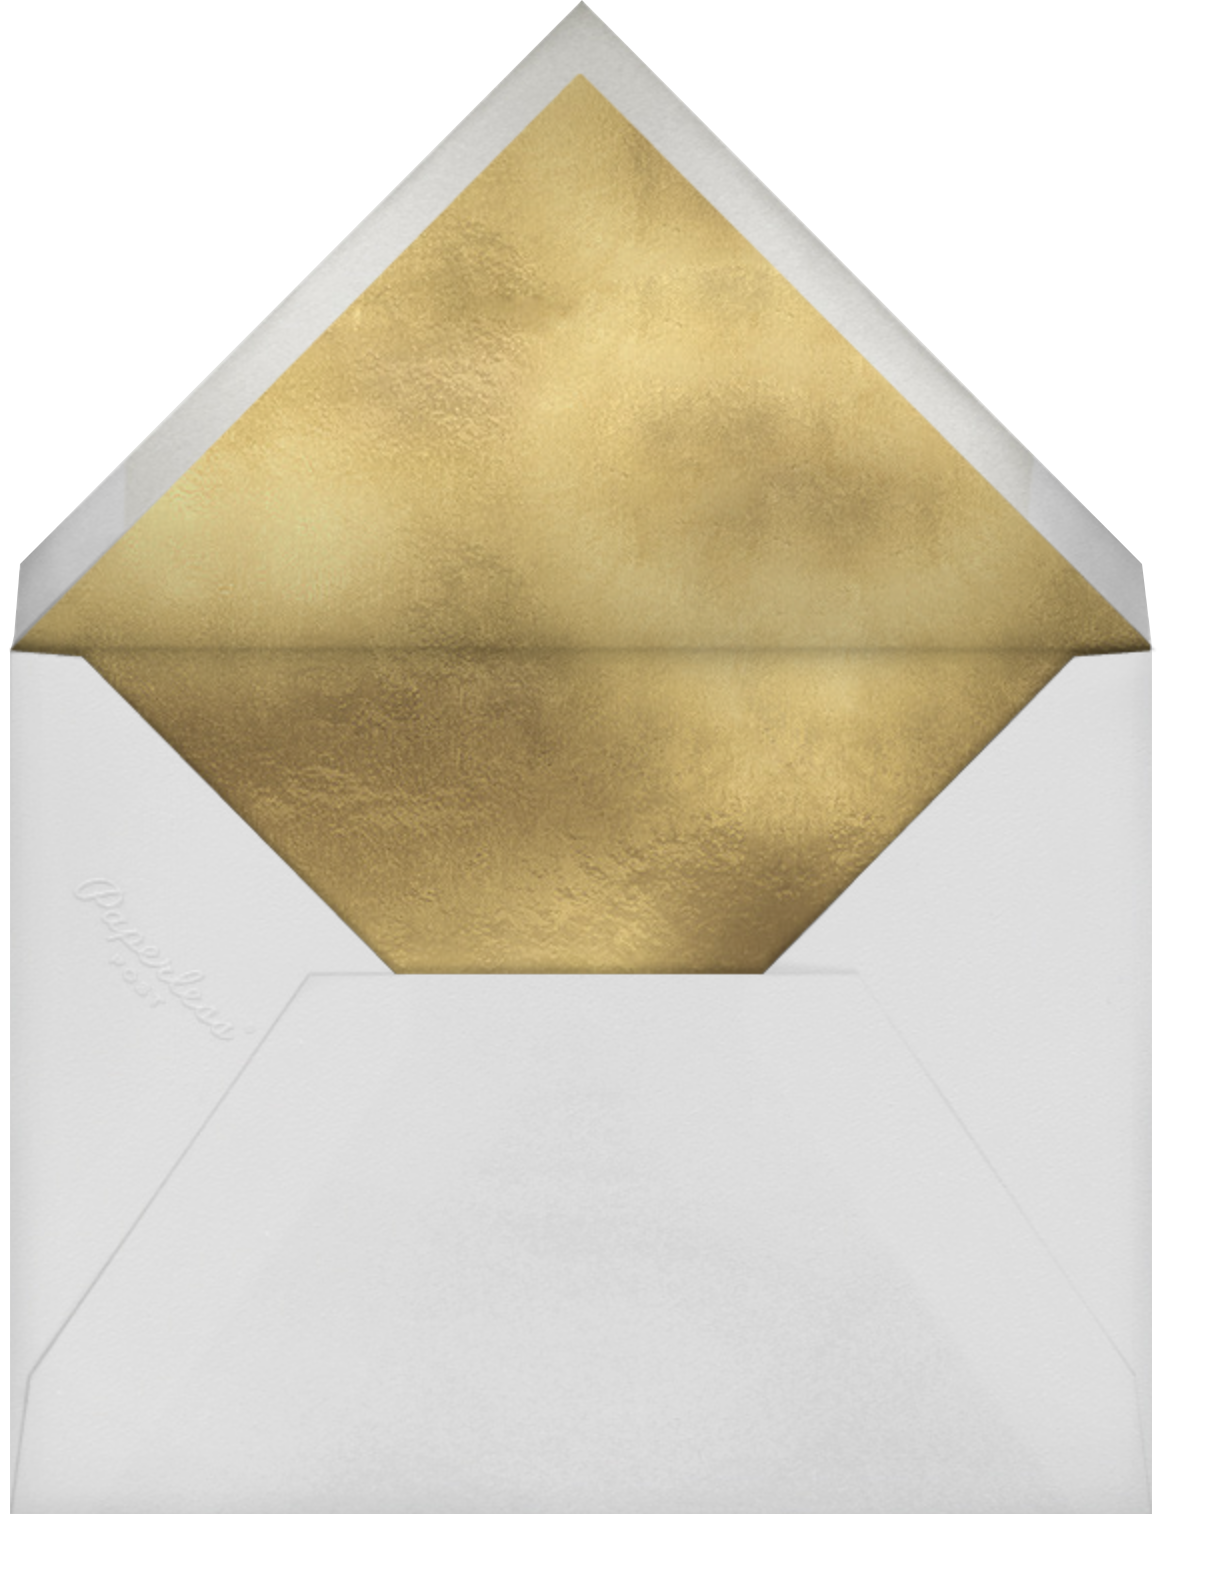 Our Adventure Begins - Paperless Post - Envelope